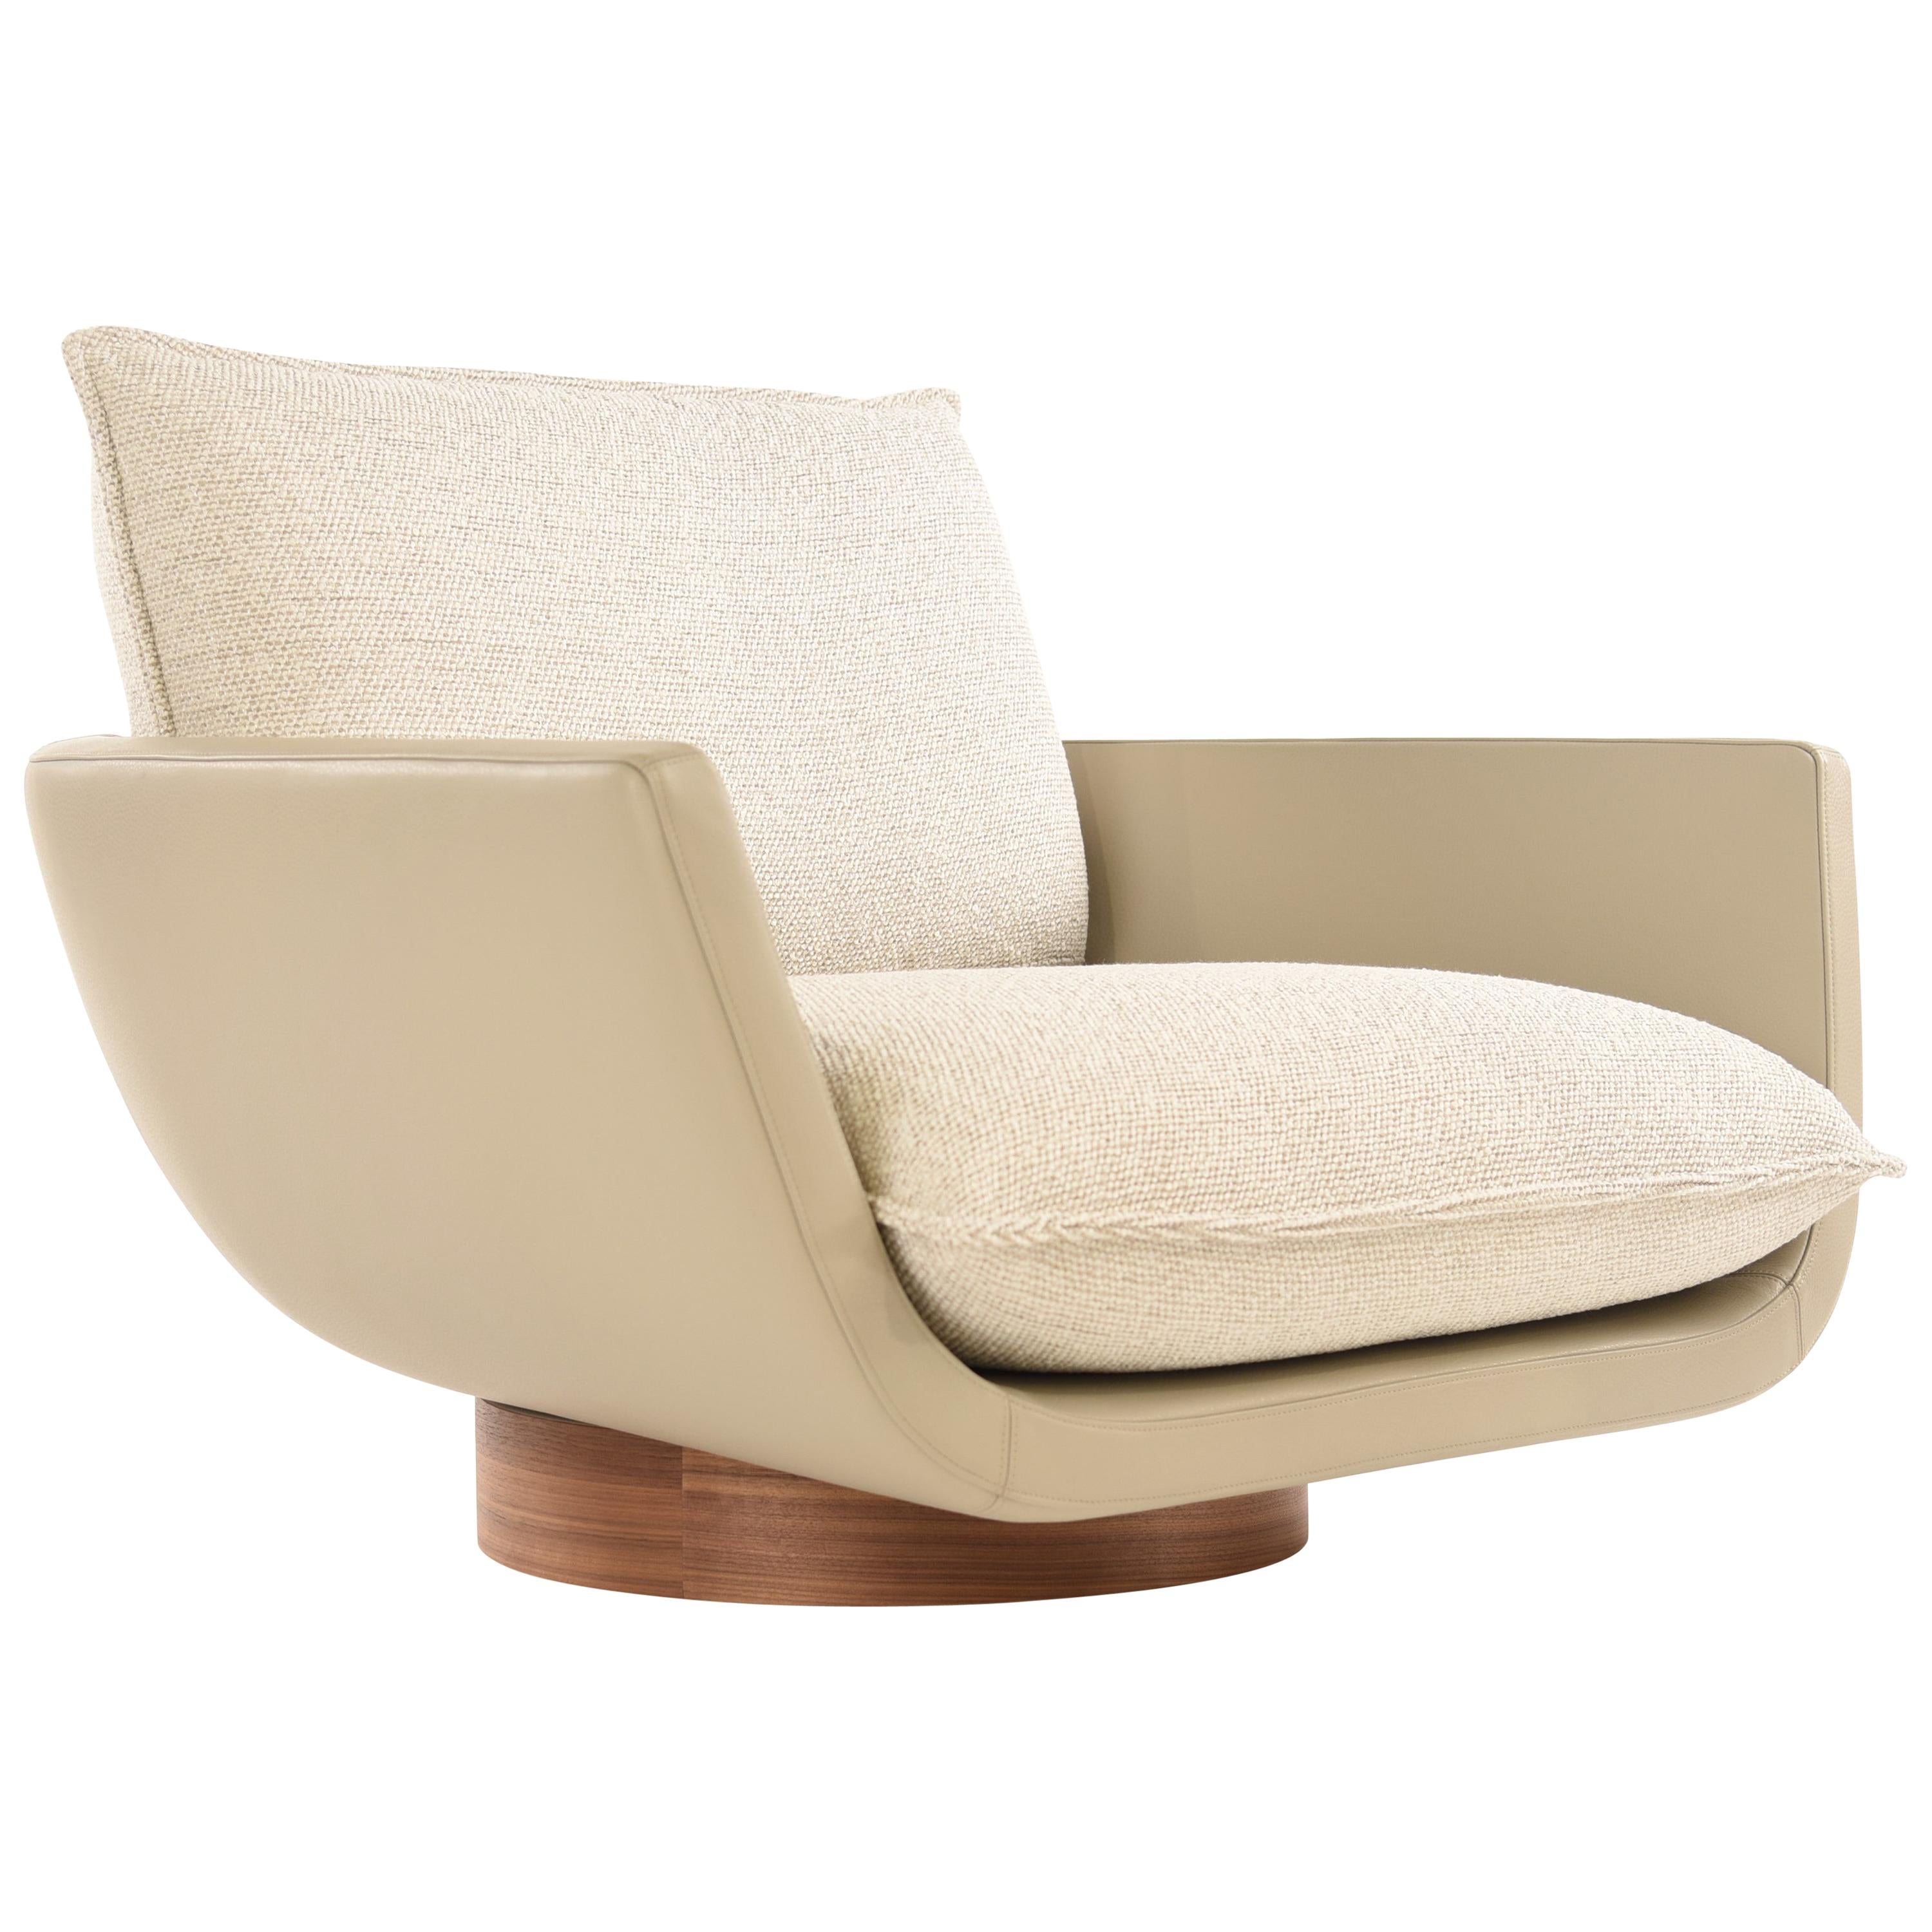 Rua Ipanema Lounge Chair by Yabu Pushelberg in Leather and Fabric